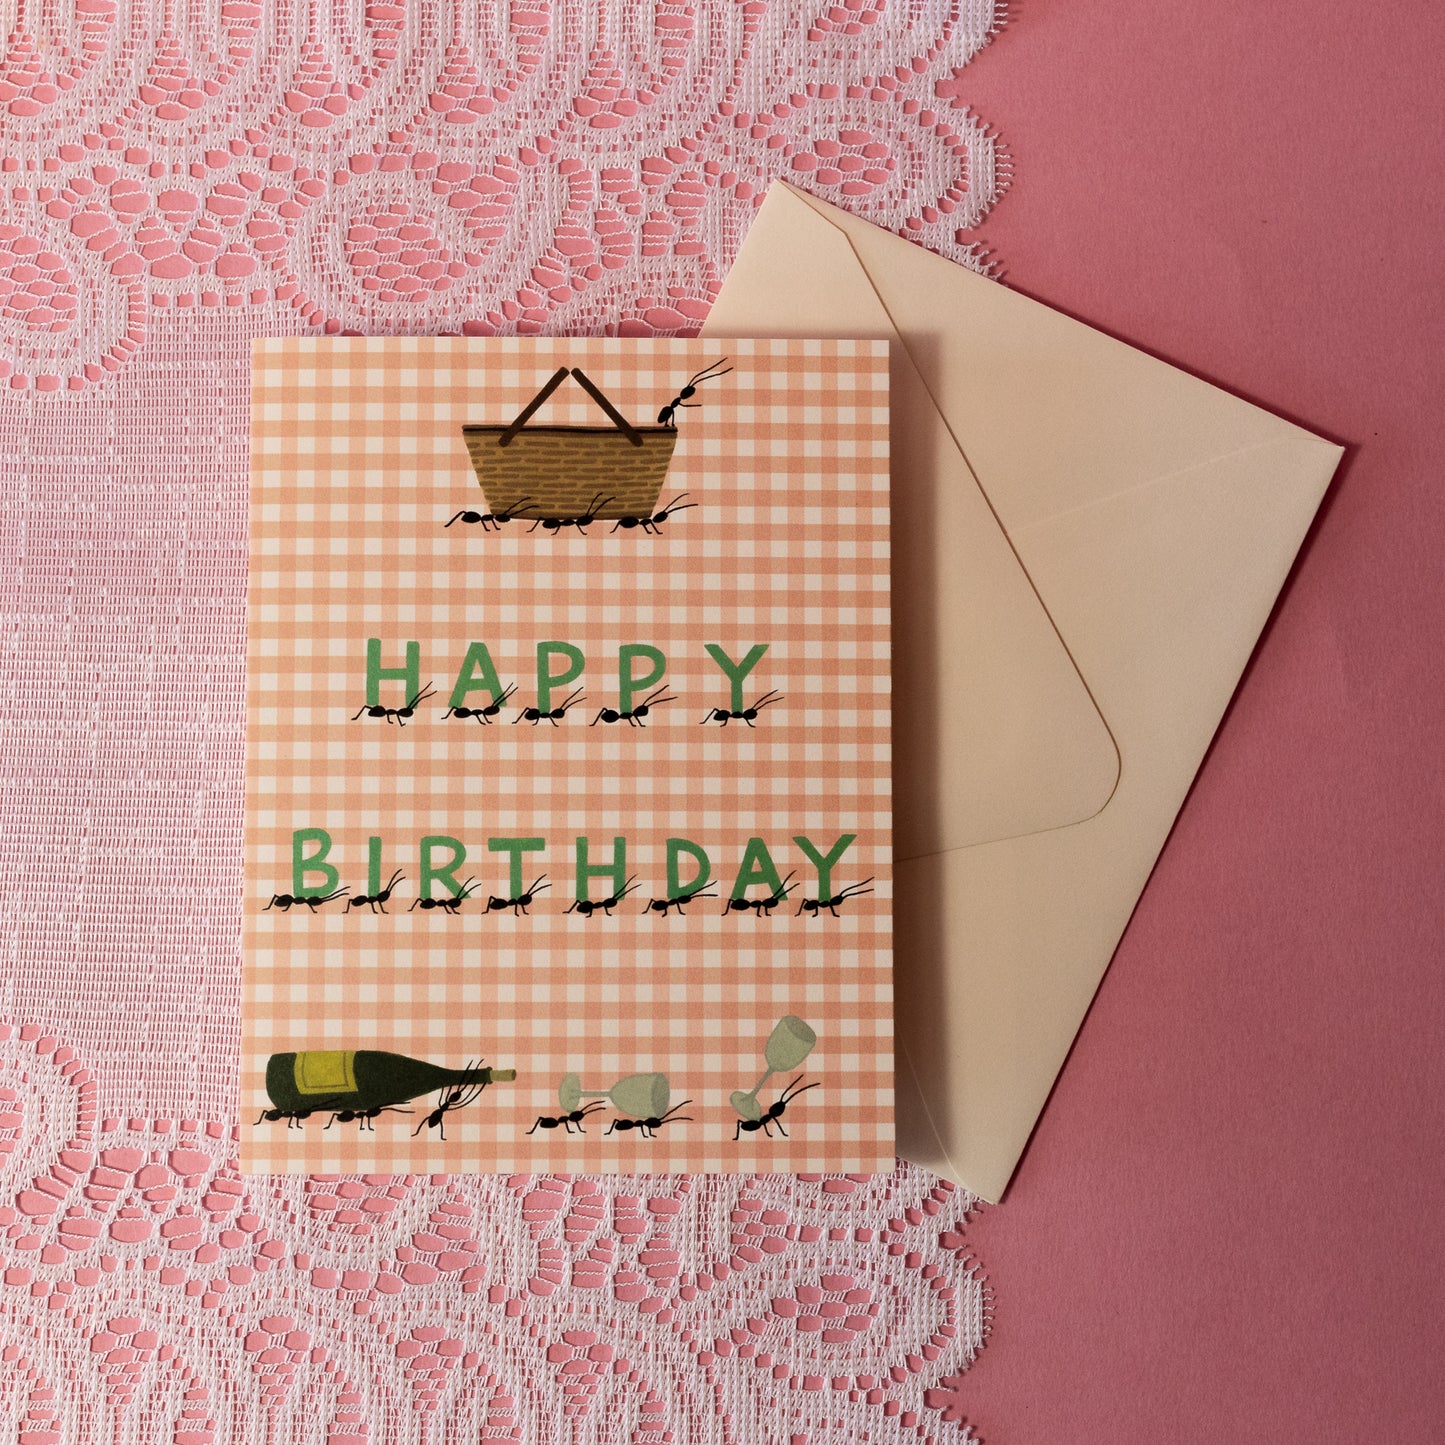 Picnic Ants Birthday Card - Gasp